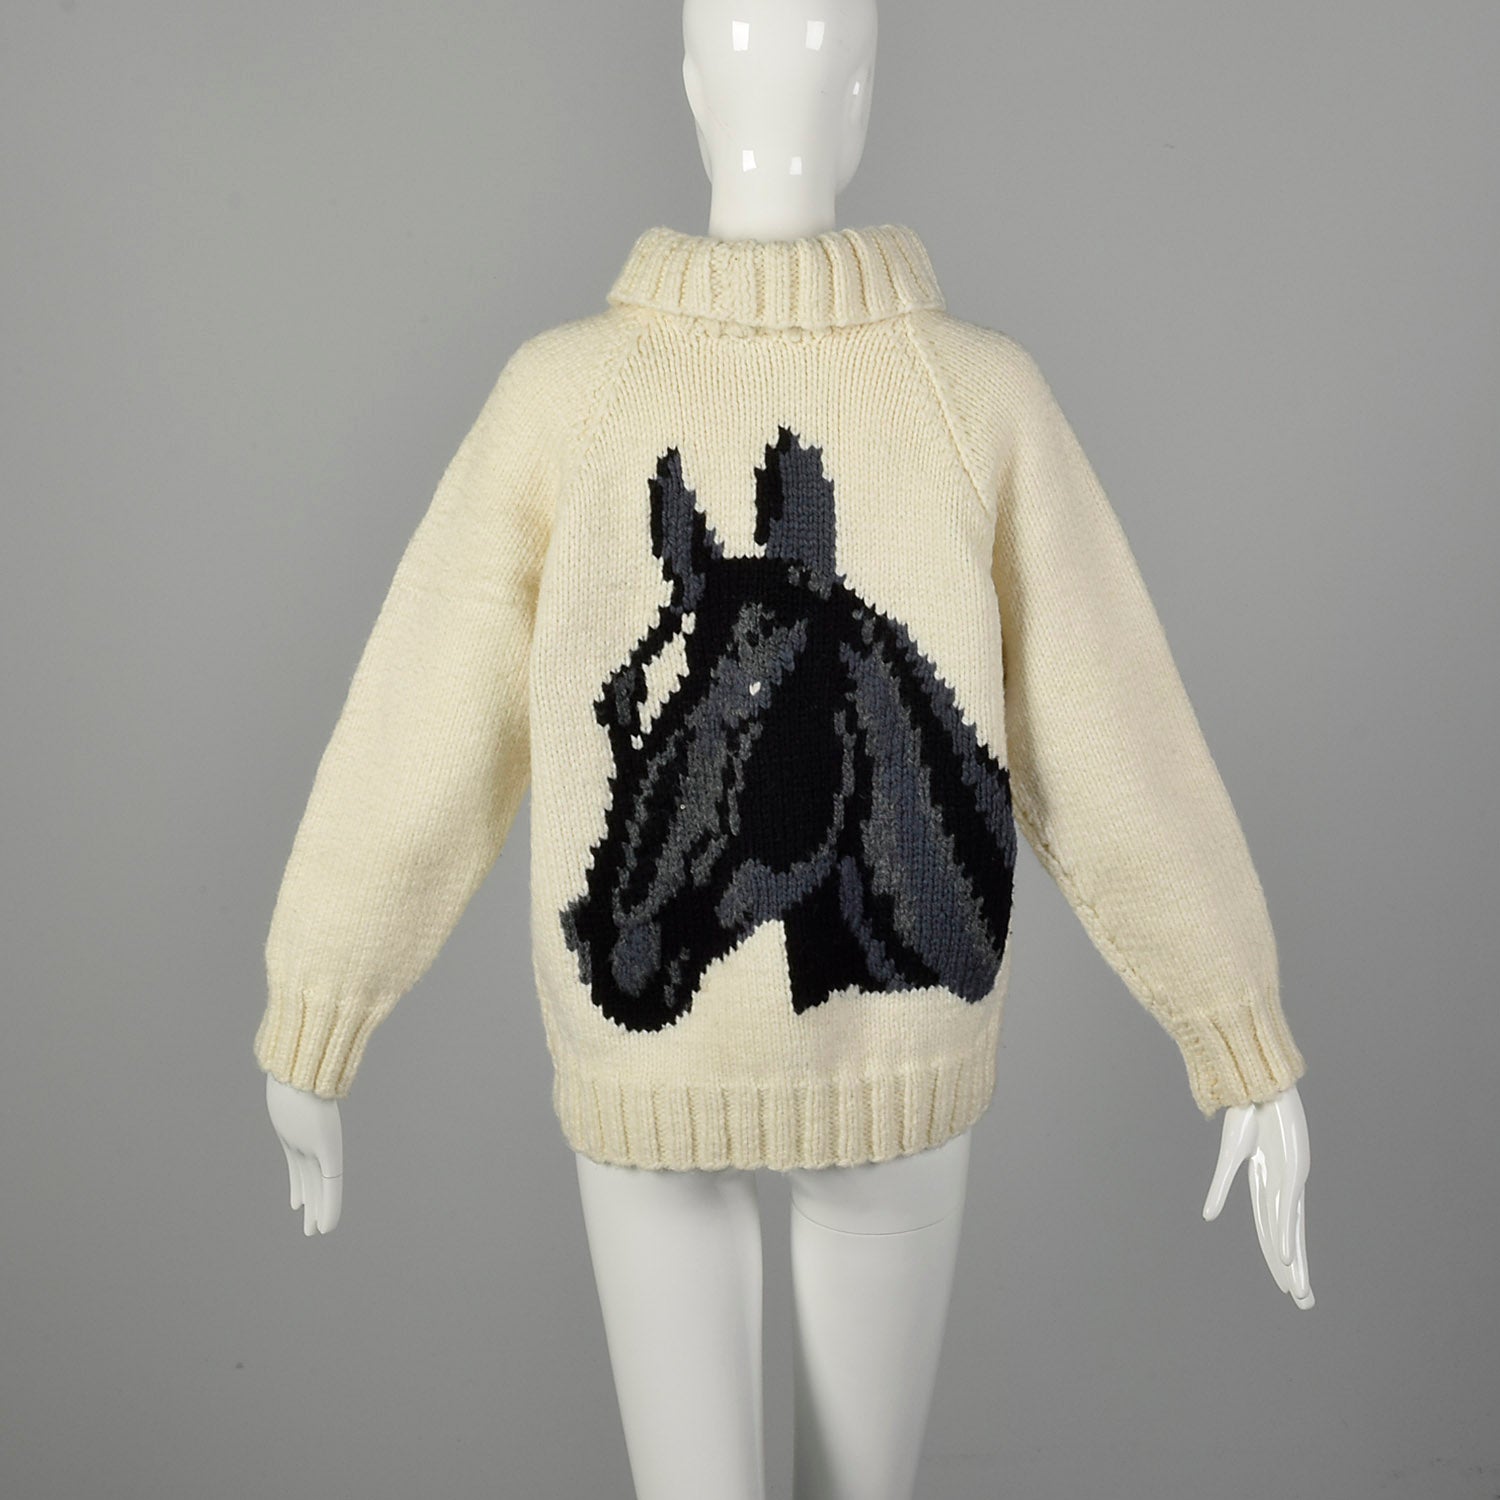 Medium 1960s Cream Knit Novelty Horse Sweater